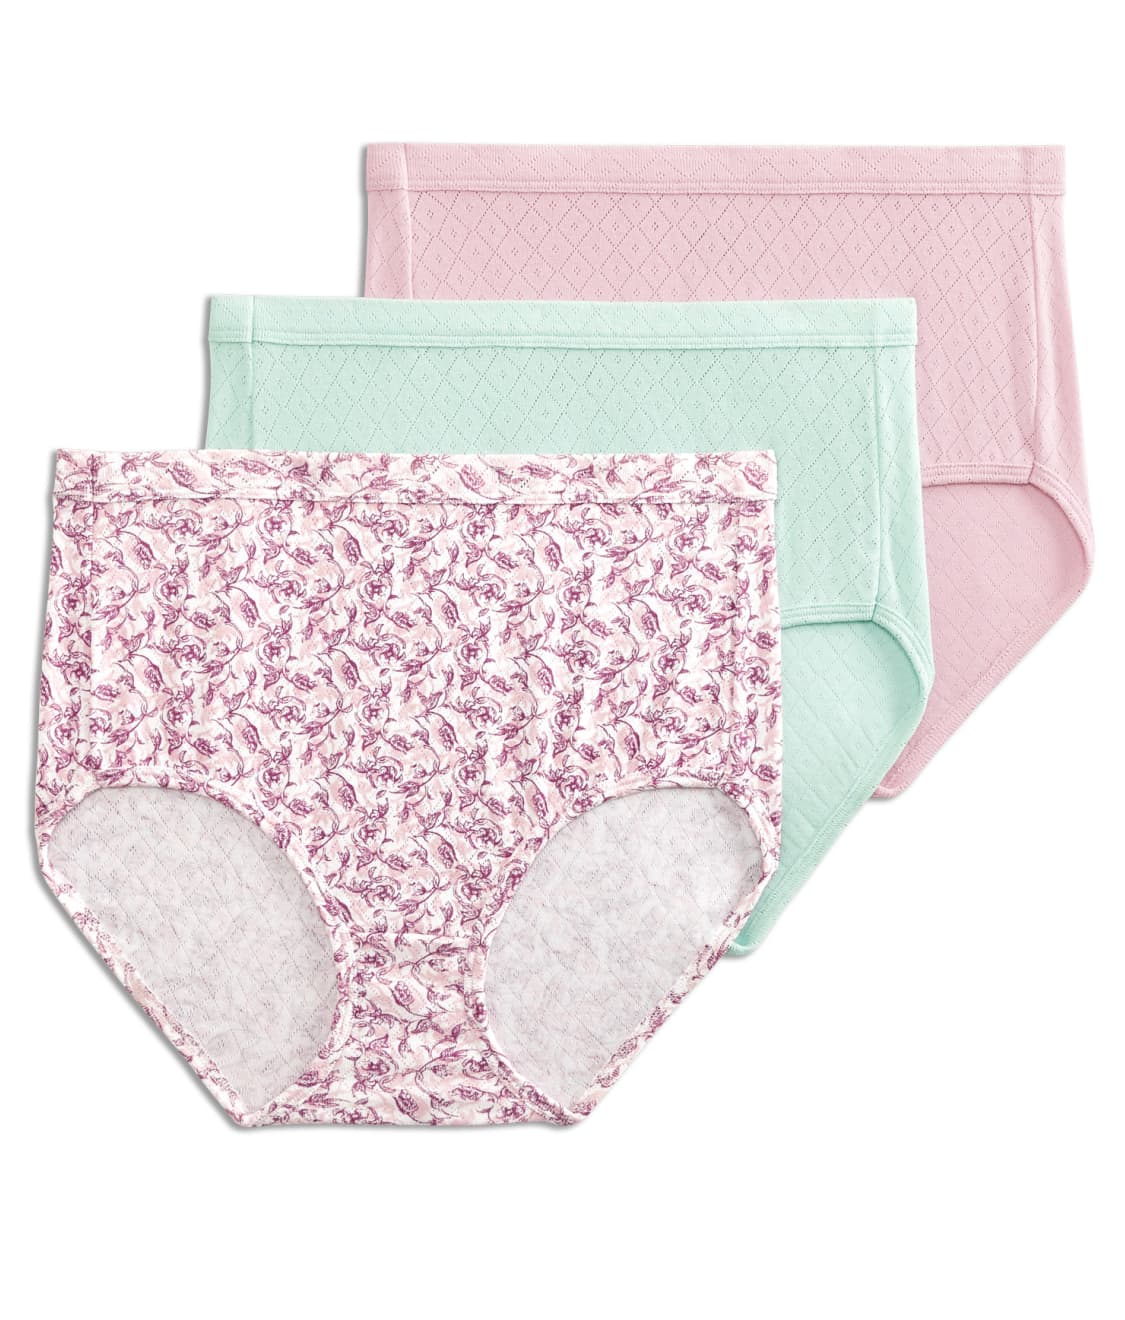 Set of 3 JOCKEY Elance BRIEFS panties classic fit gray purple pink/white design 